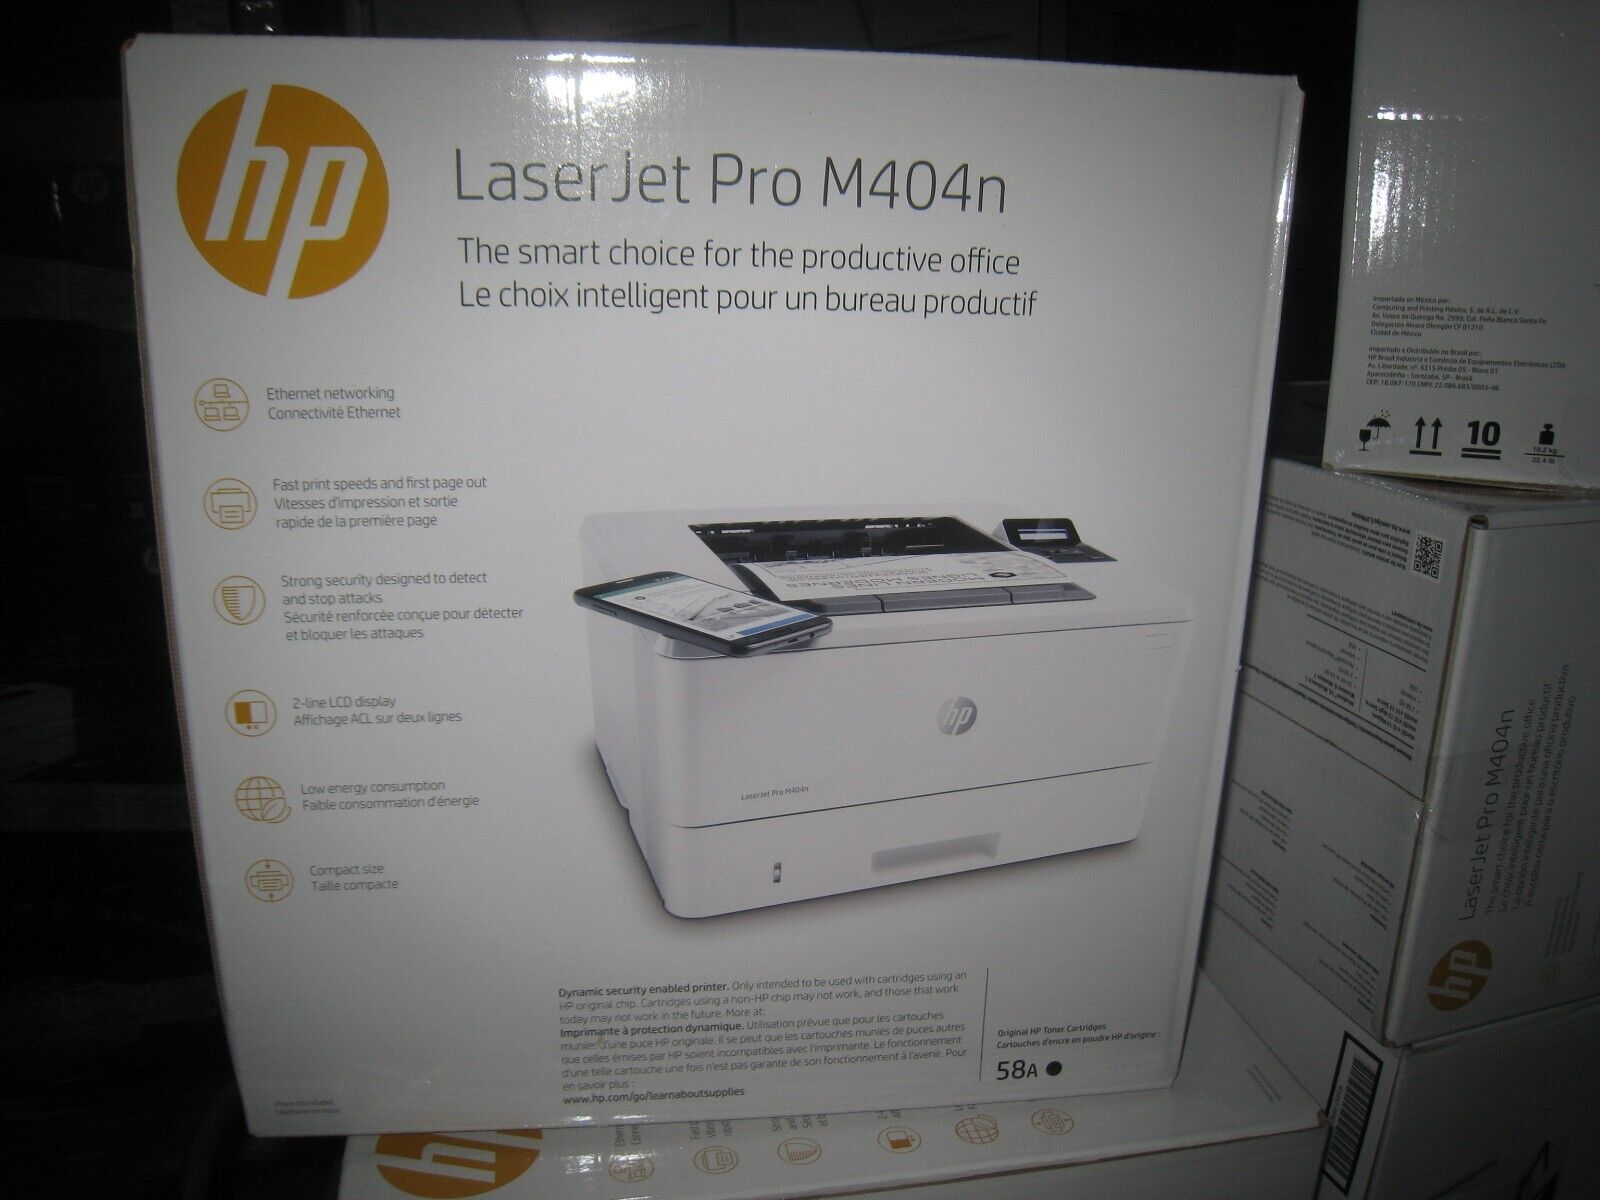 New HP LaserJet Pro M404n Monochrome Printer with built-in Ethernet (W1A52A#BGJ)